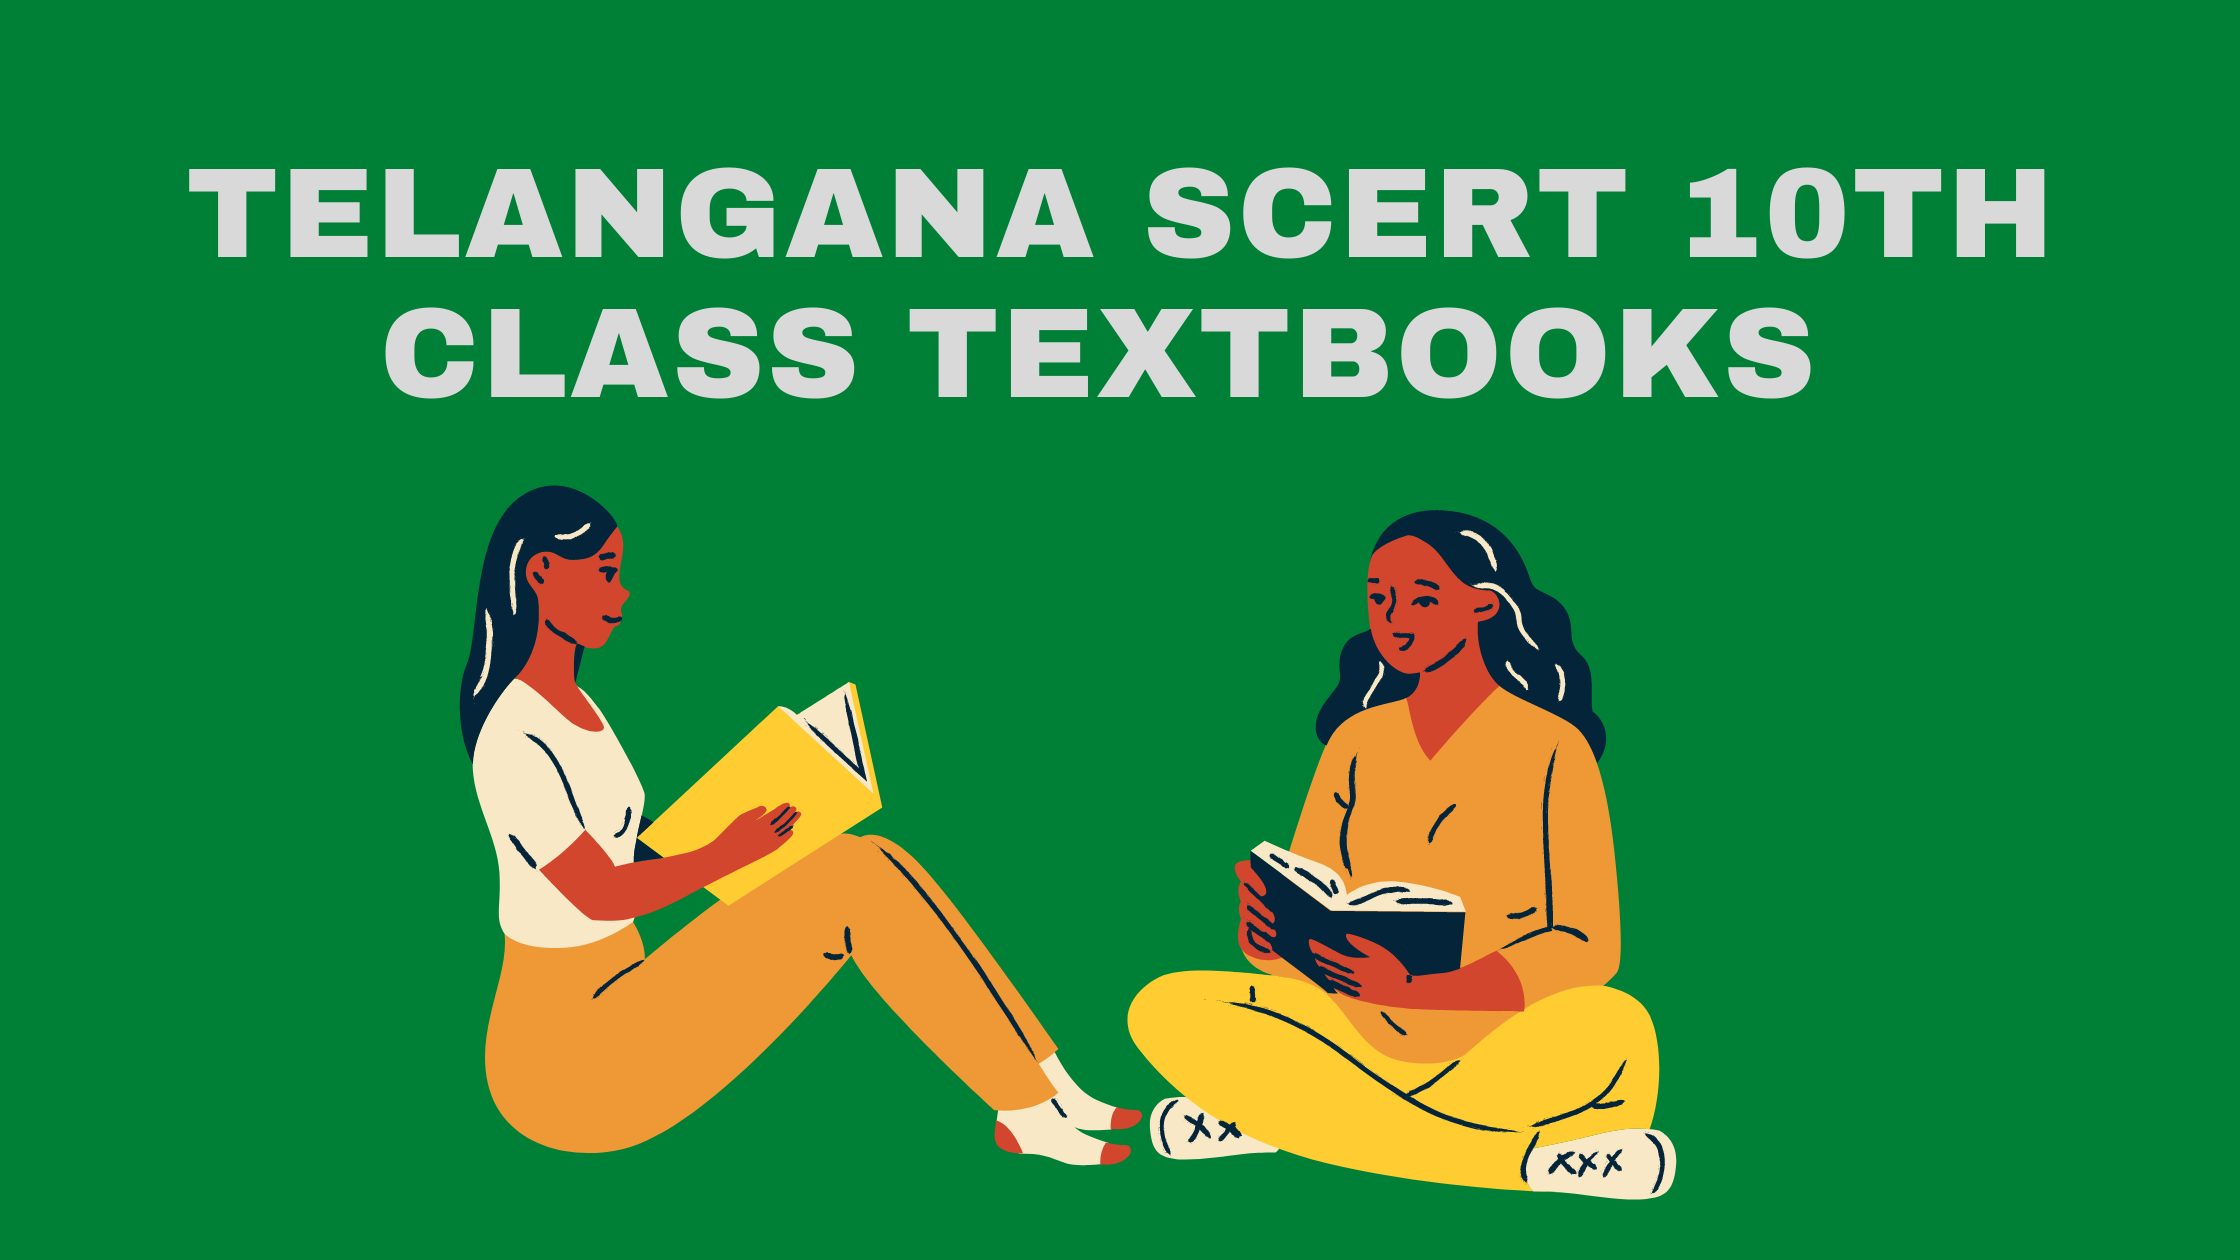 Telangana SCERT 10th Class Textbooks